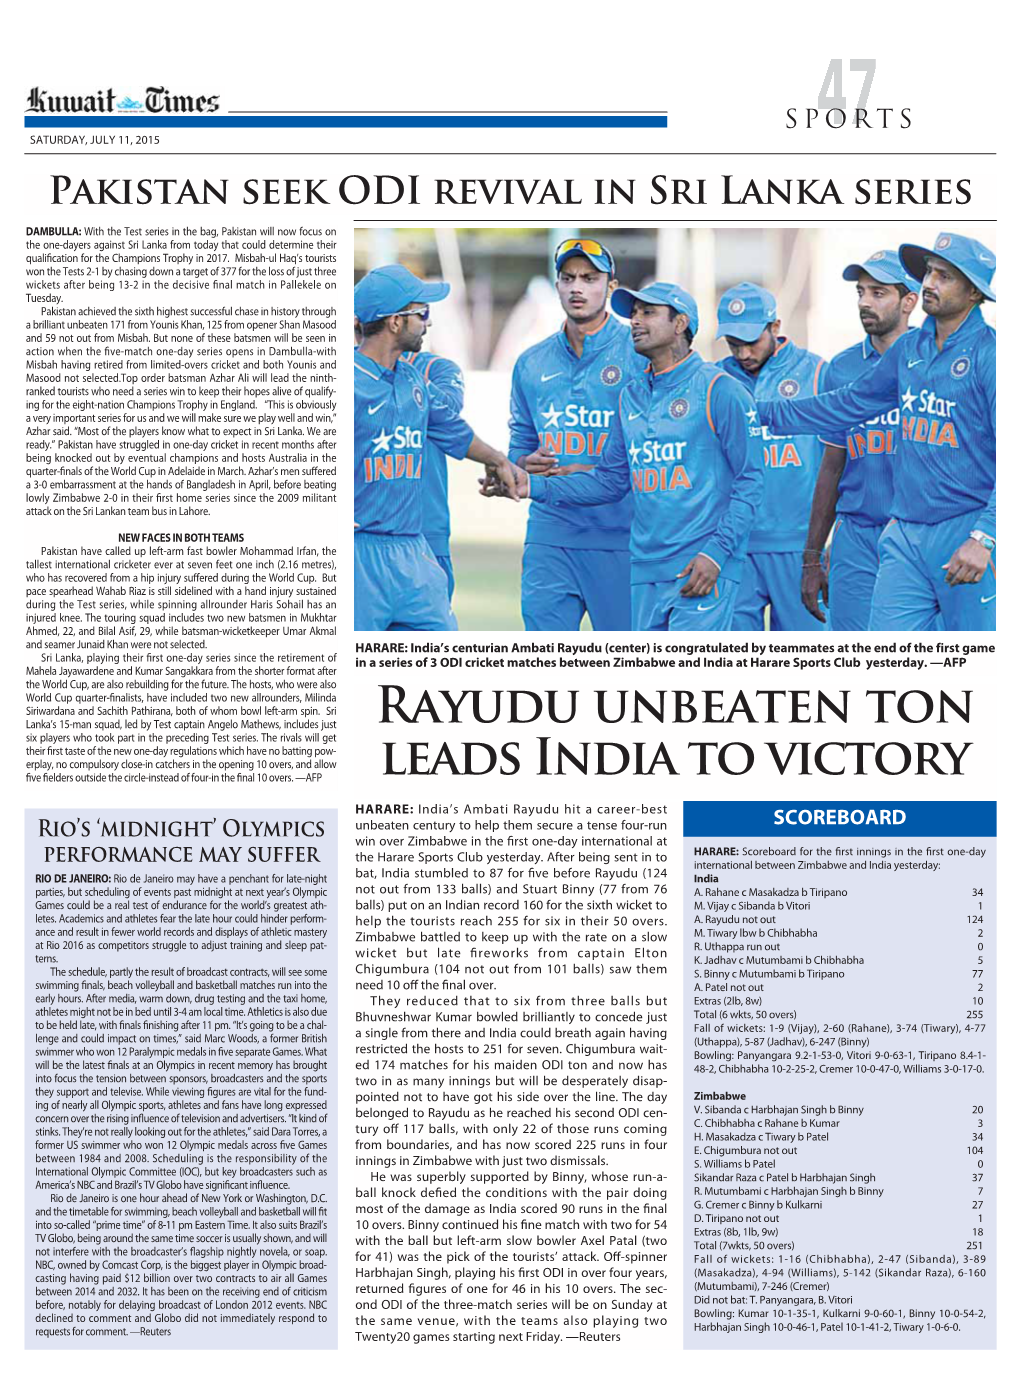 Rayudu Unbeaten Ton Leads India to Victory